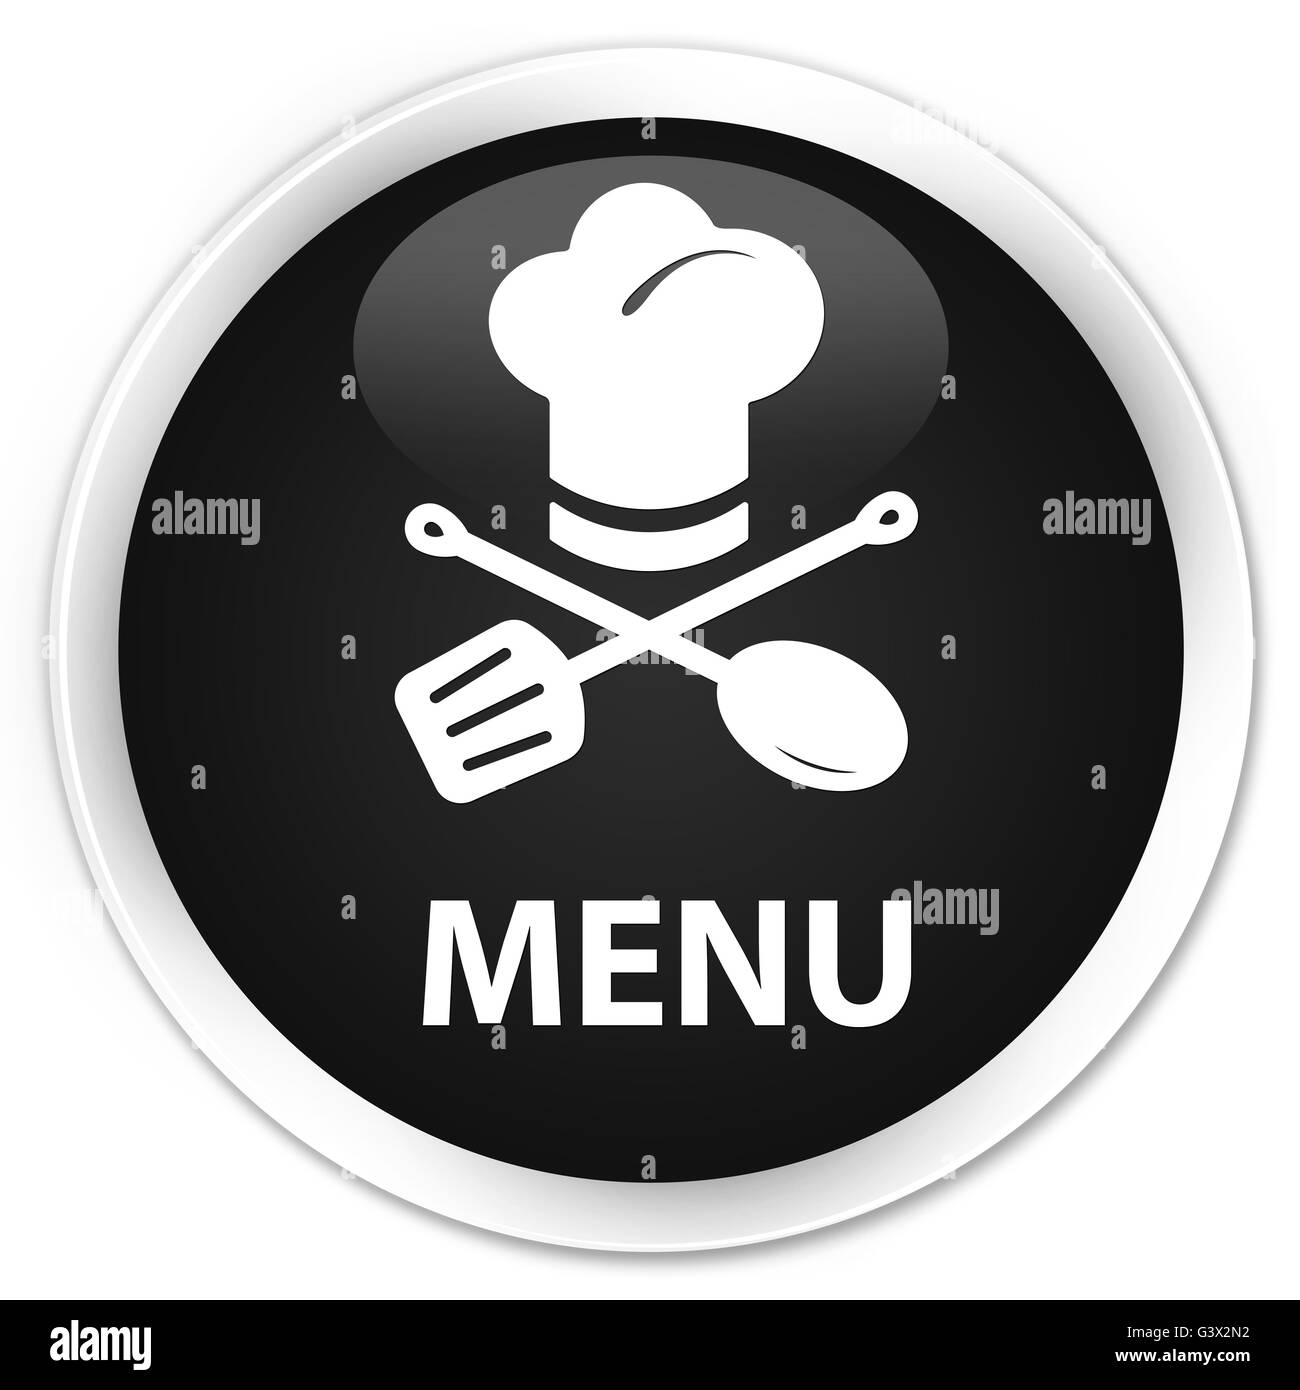 Menu (restaurant icon) isolated on premium black round button abstract illustration Stock Photo